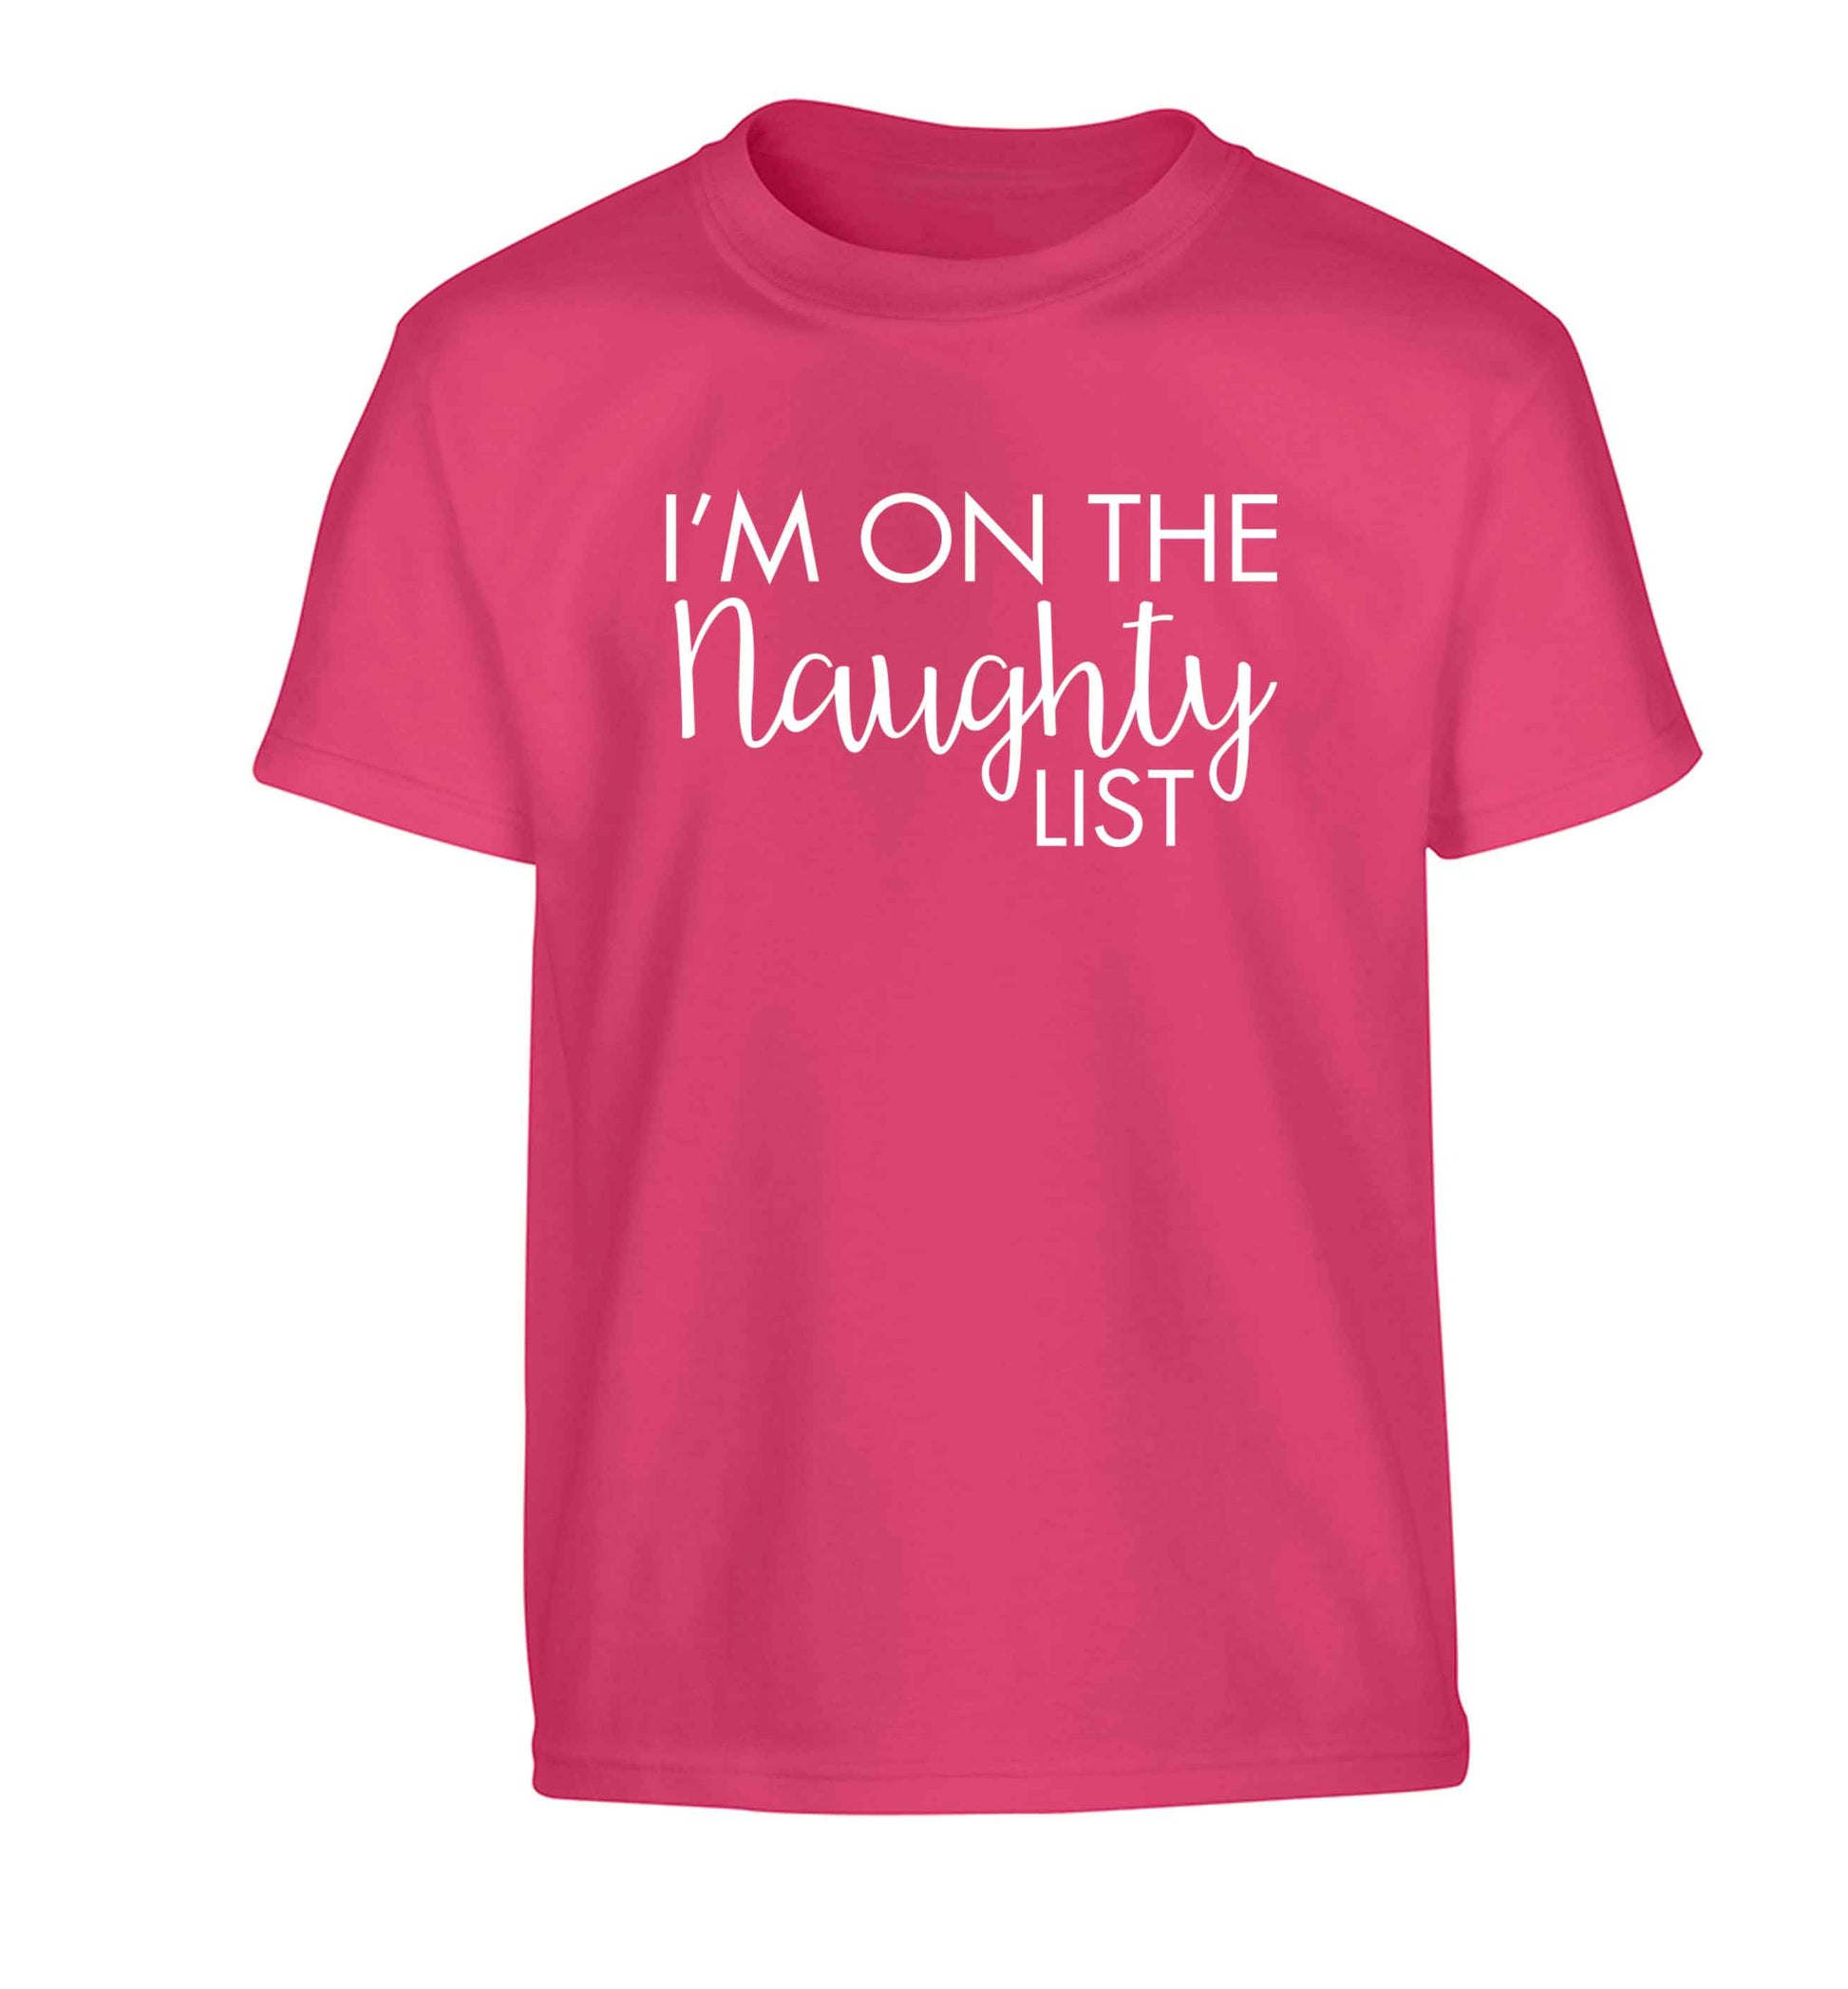 I'm on the naughty list Children's pink Tshirt 12-13 Years